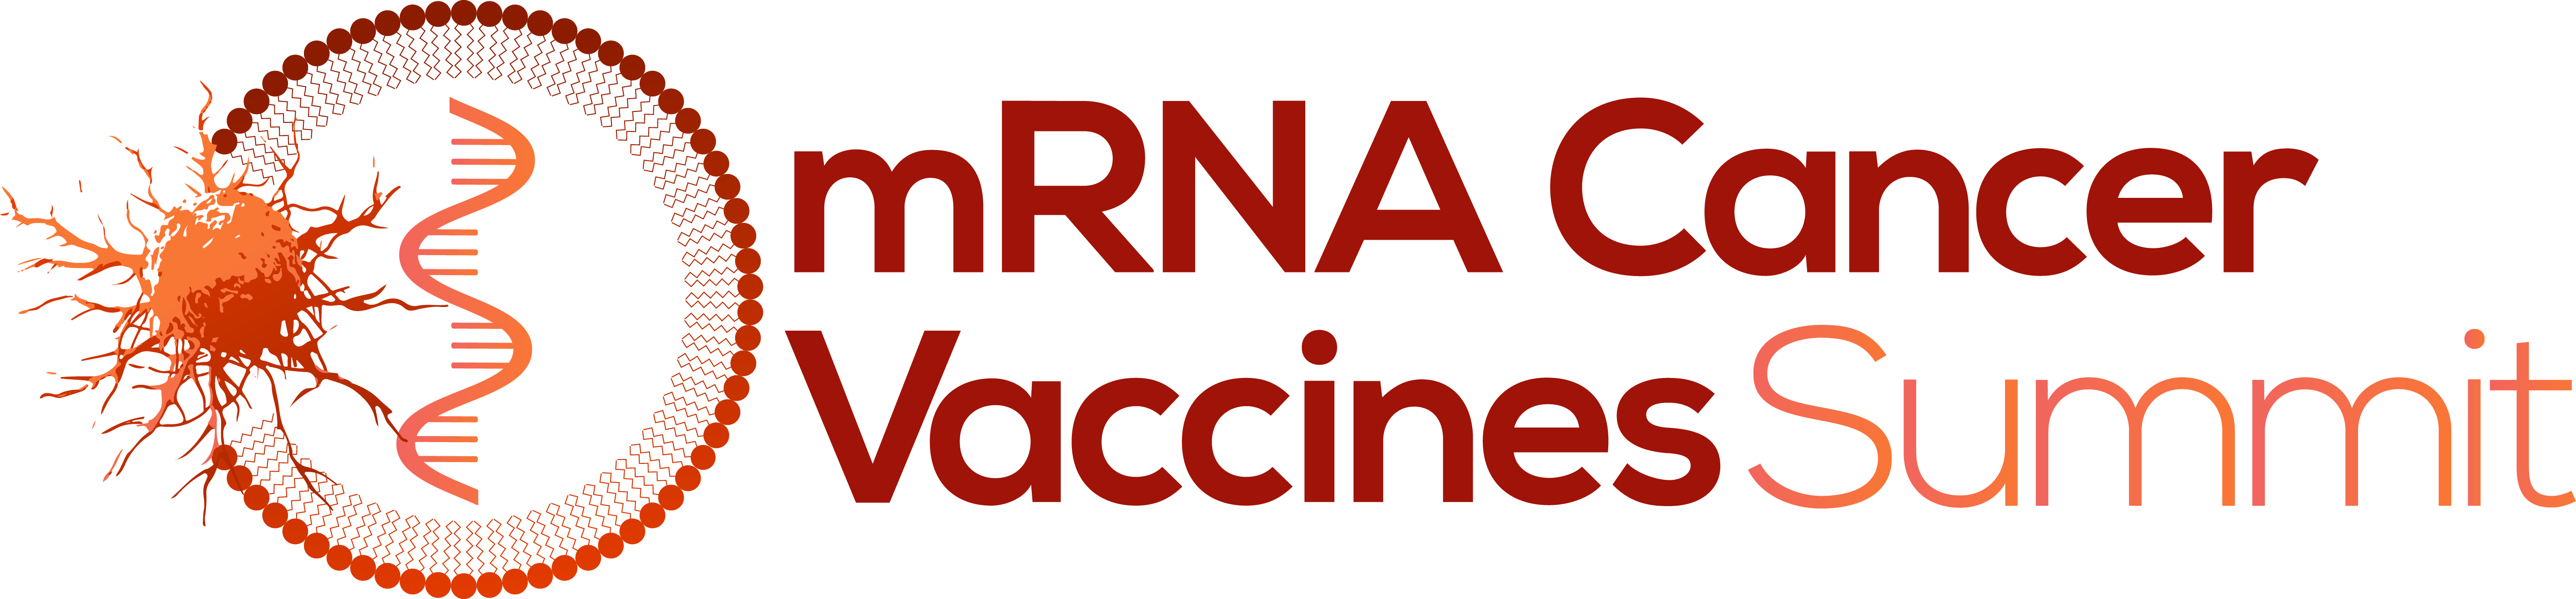 mRNA Cancer Vaccines Summit logo